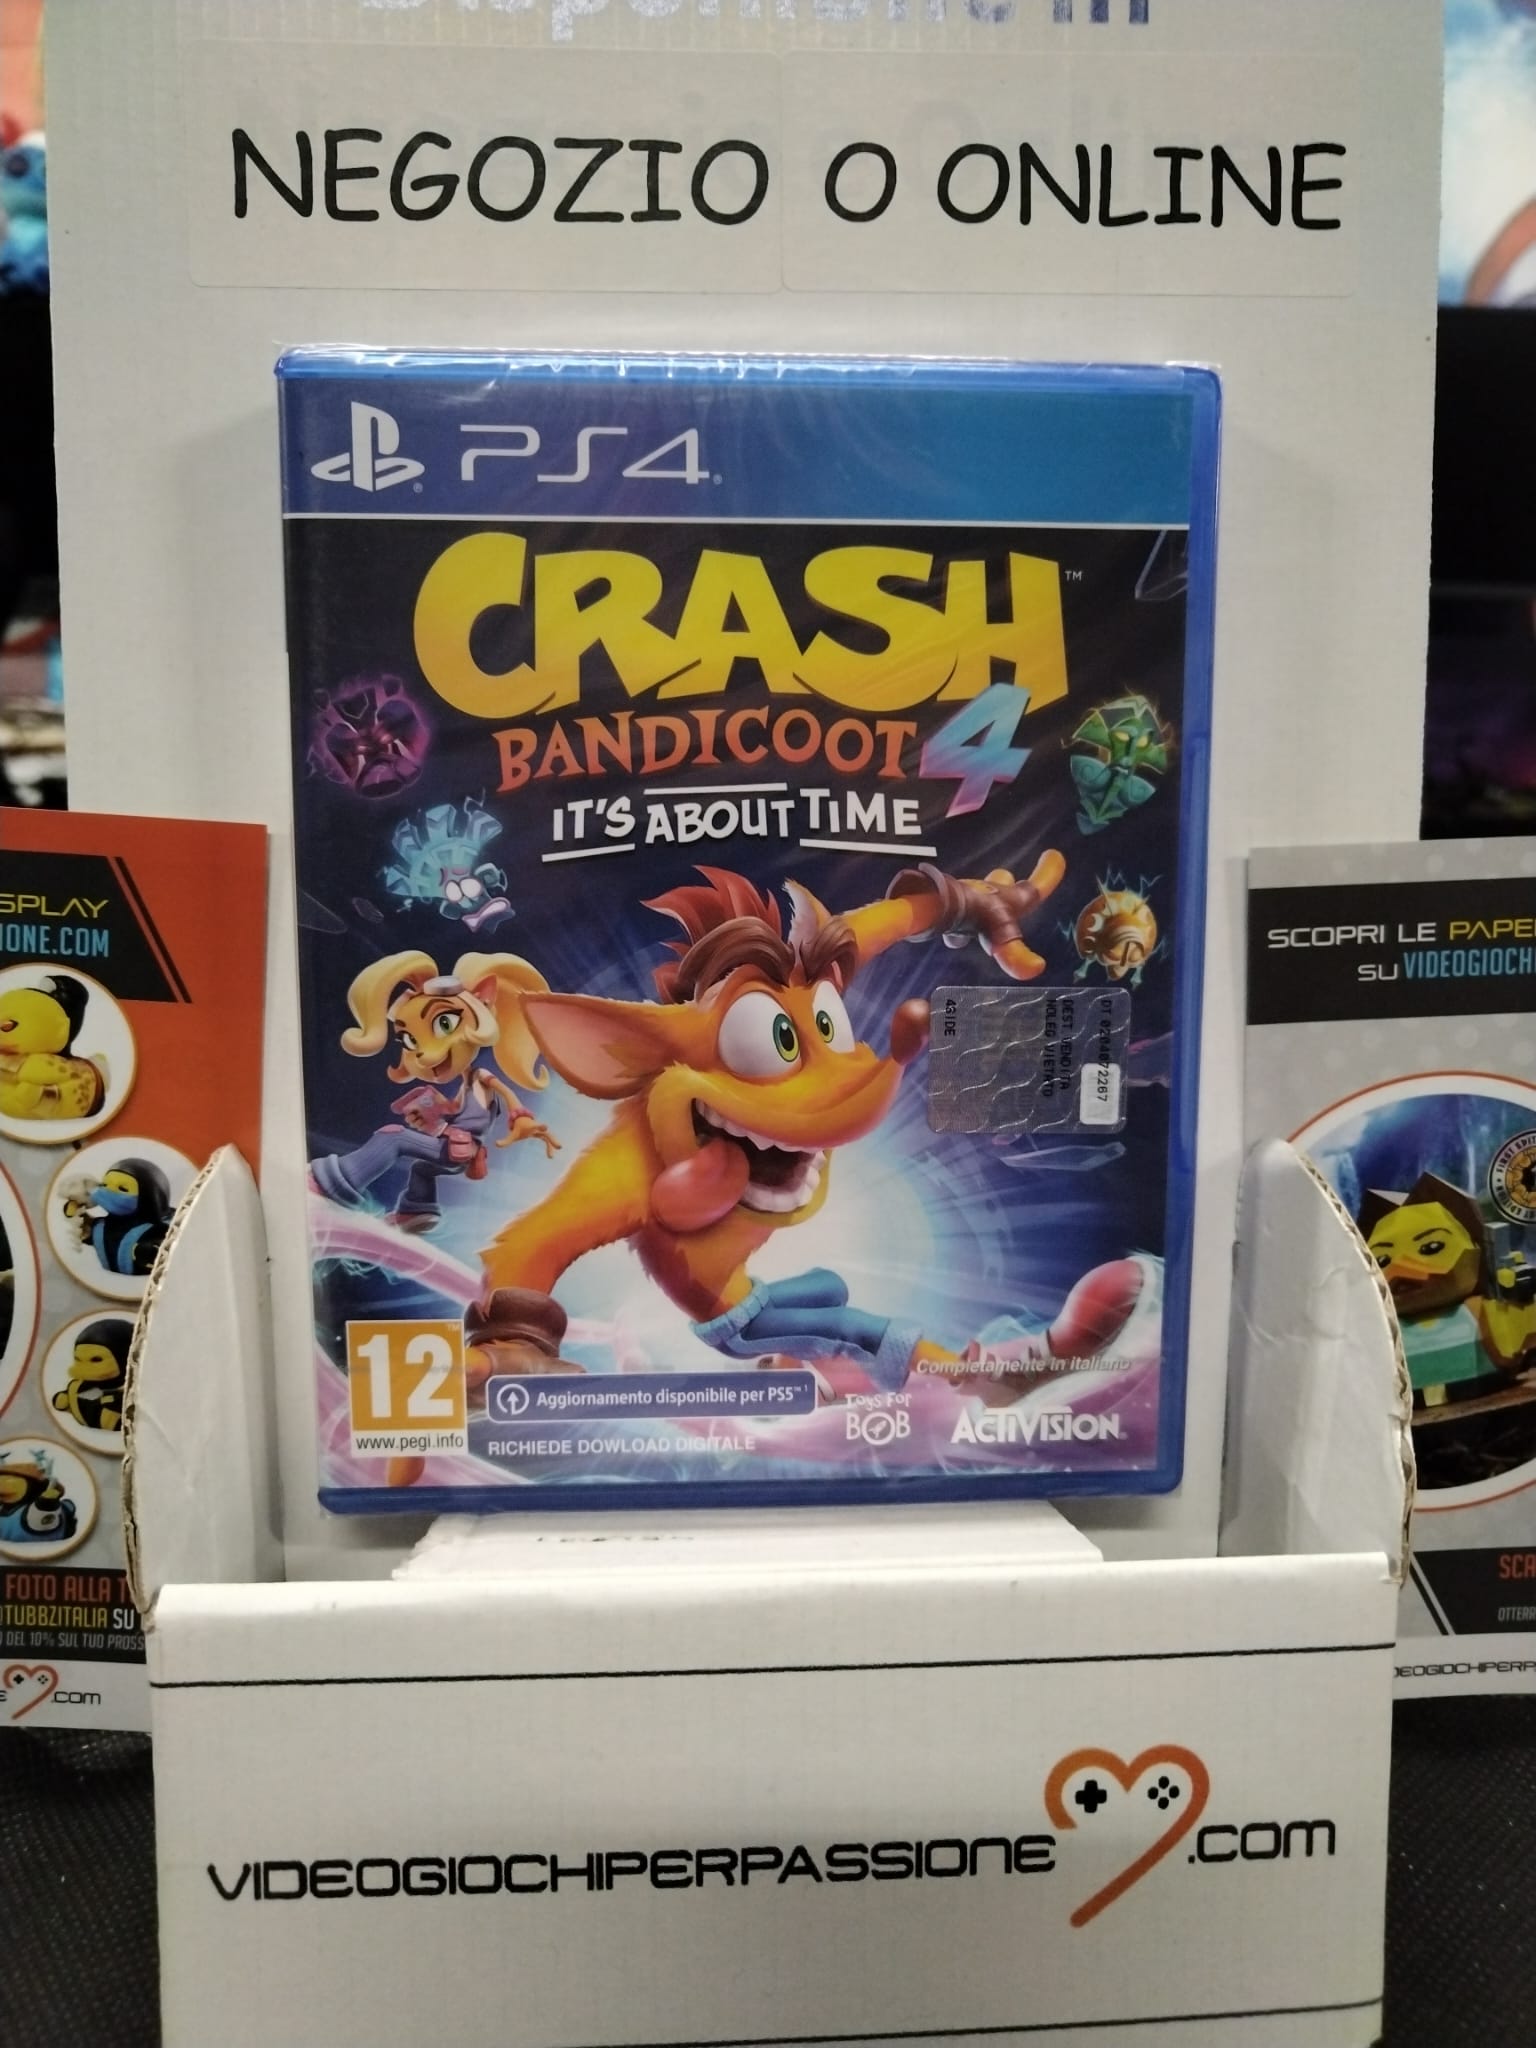 Crash Bandicoot 4: Its About Time - Playstation 4 Edizione ITALIANA